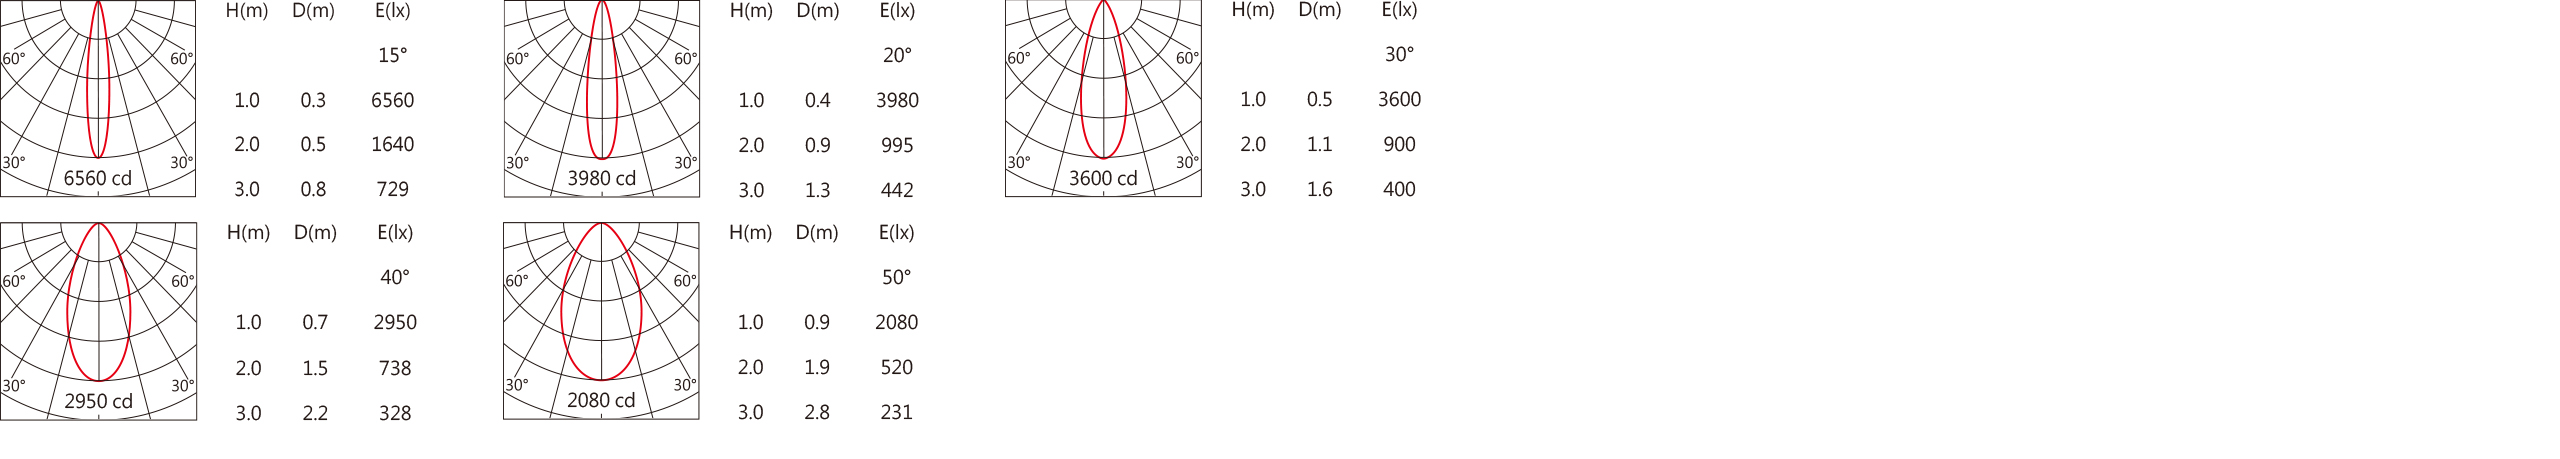 OFA-107C Light distribution.jpg